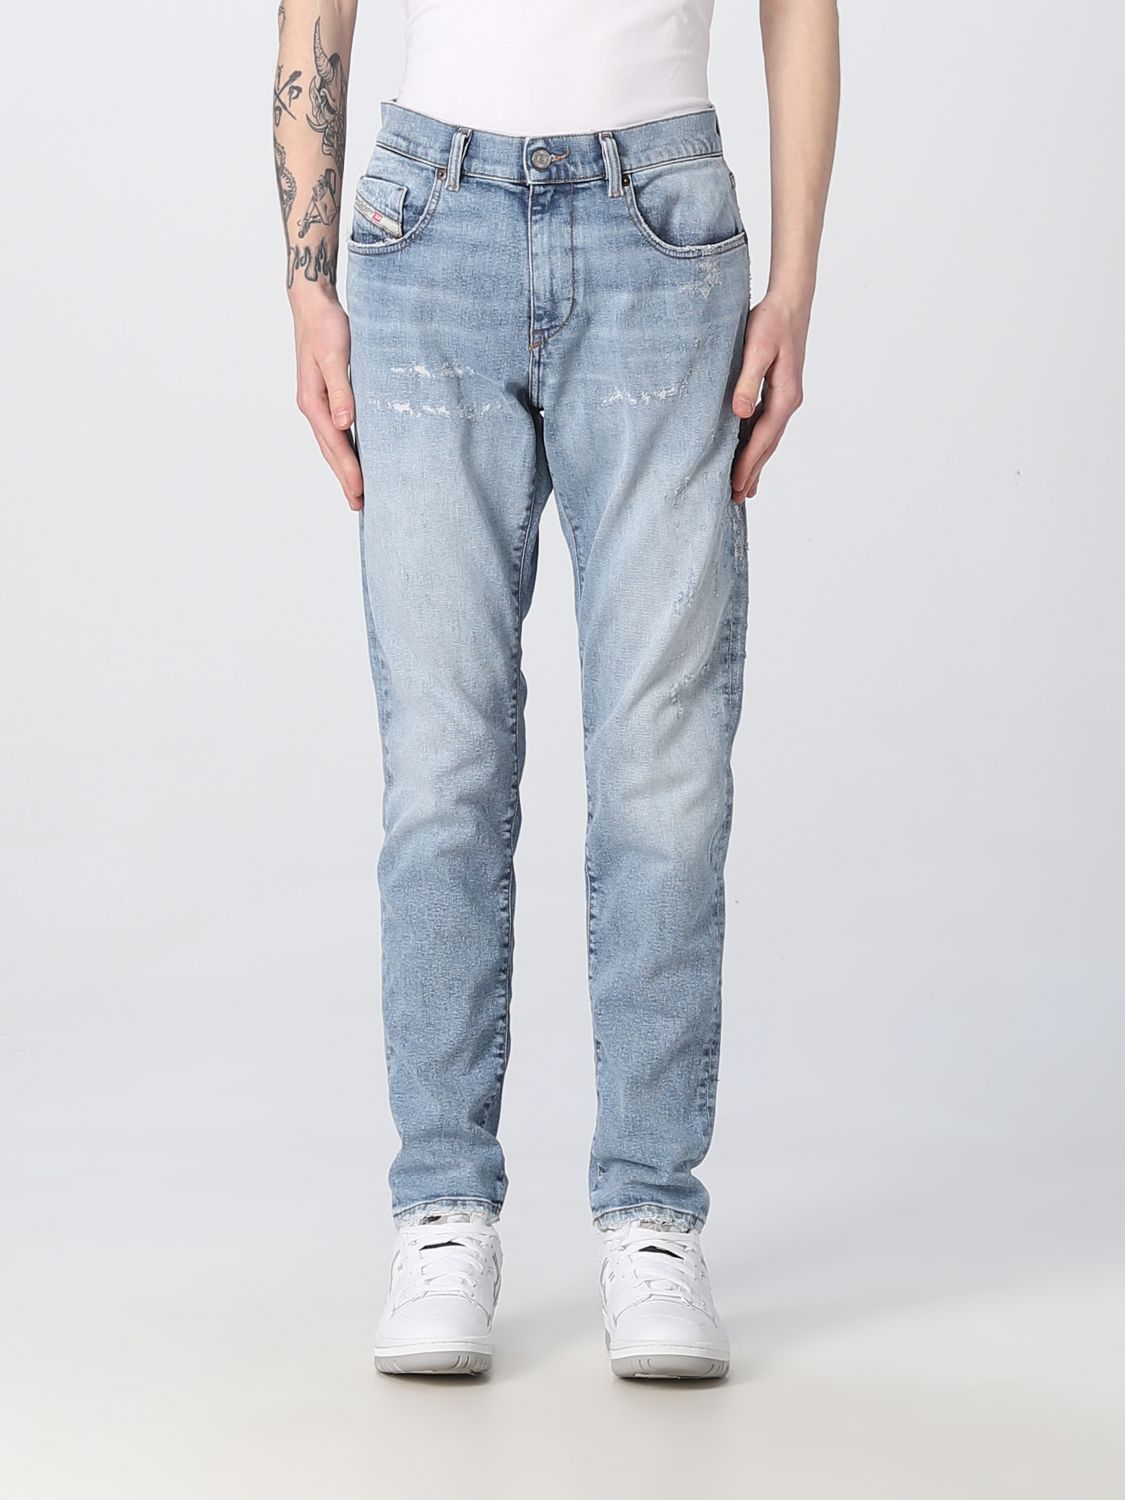 Antagonist ballon zak DIESEL: jeans for man - Denim | Diesel jeans A0356209E73 online on  GIGLIO.COM